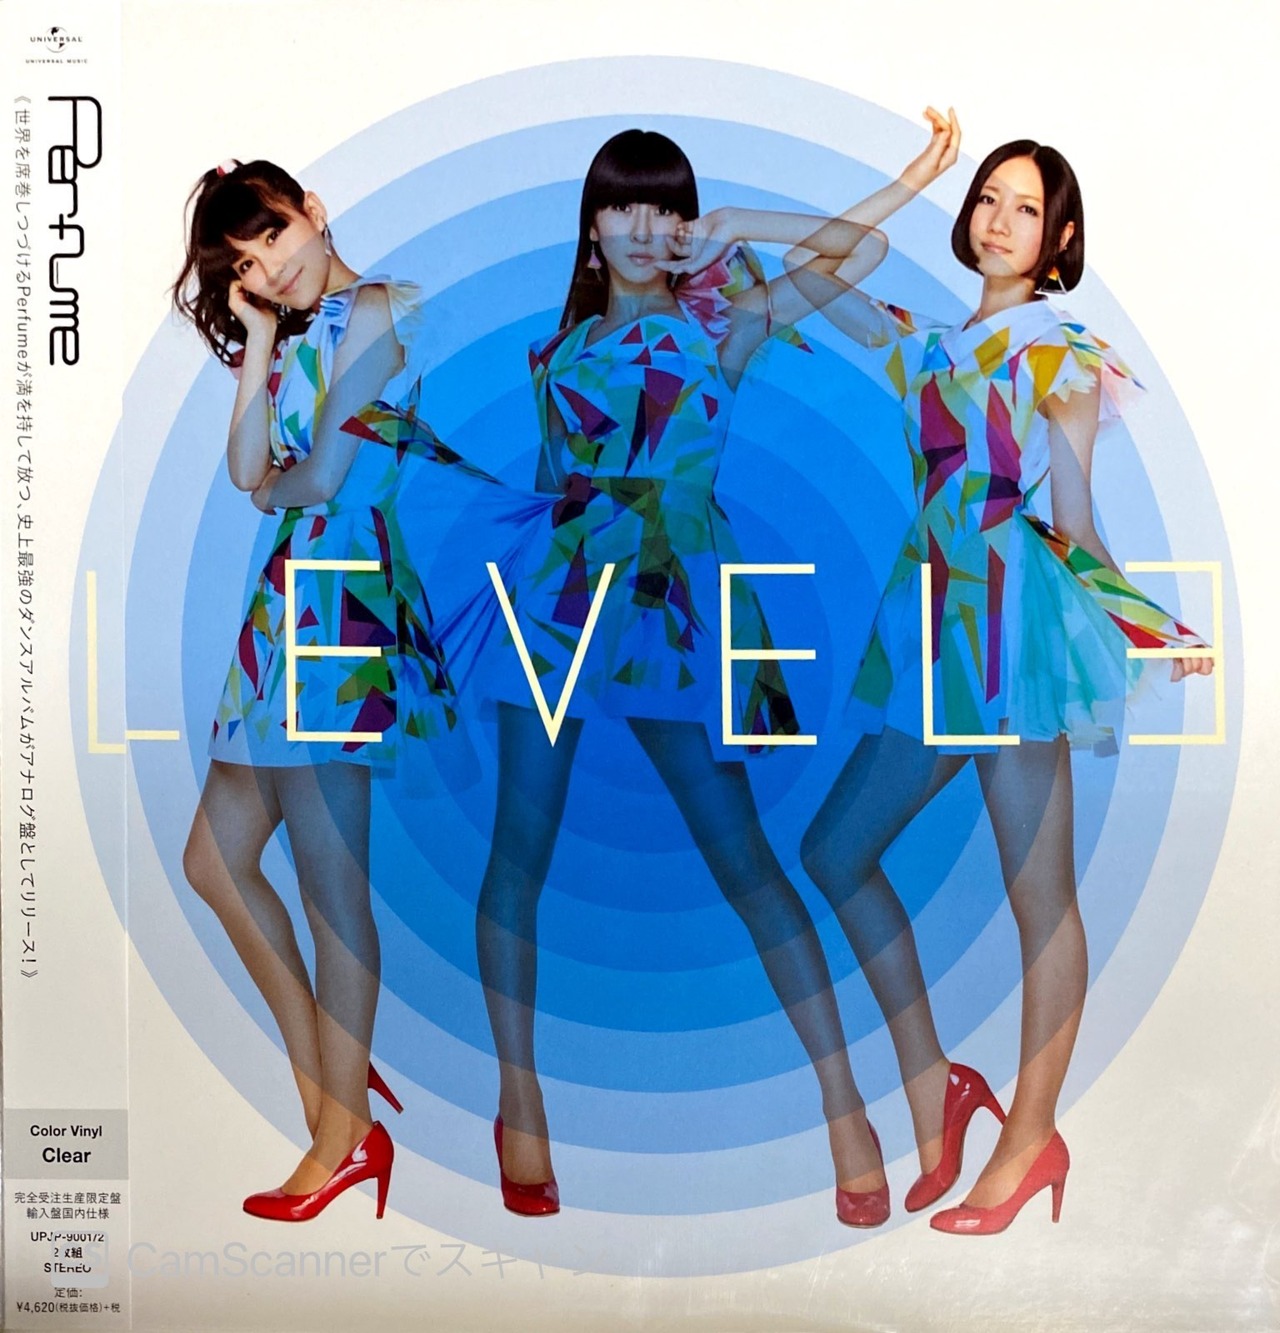 Perfume 「LEVEL3」12インチアナログ盤（Color Vinyl・クリアー）